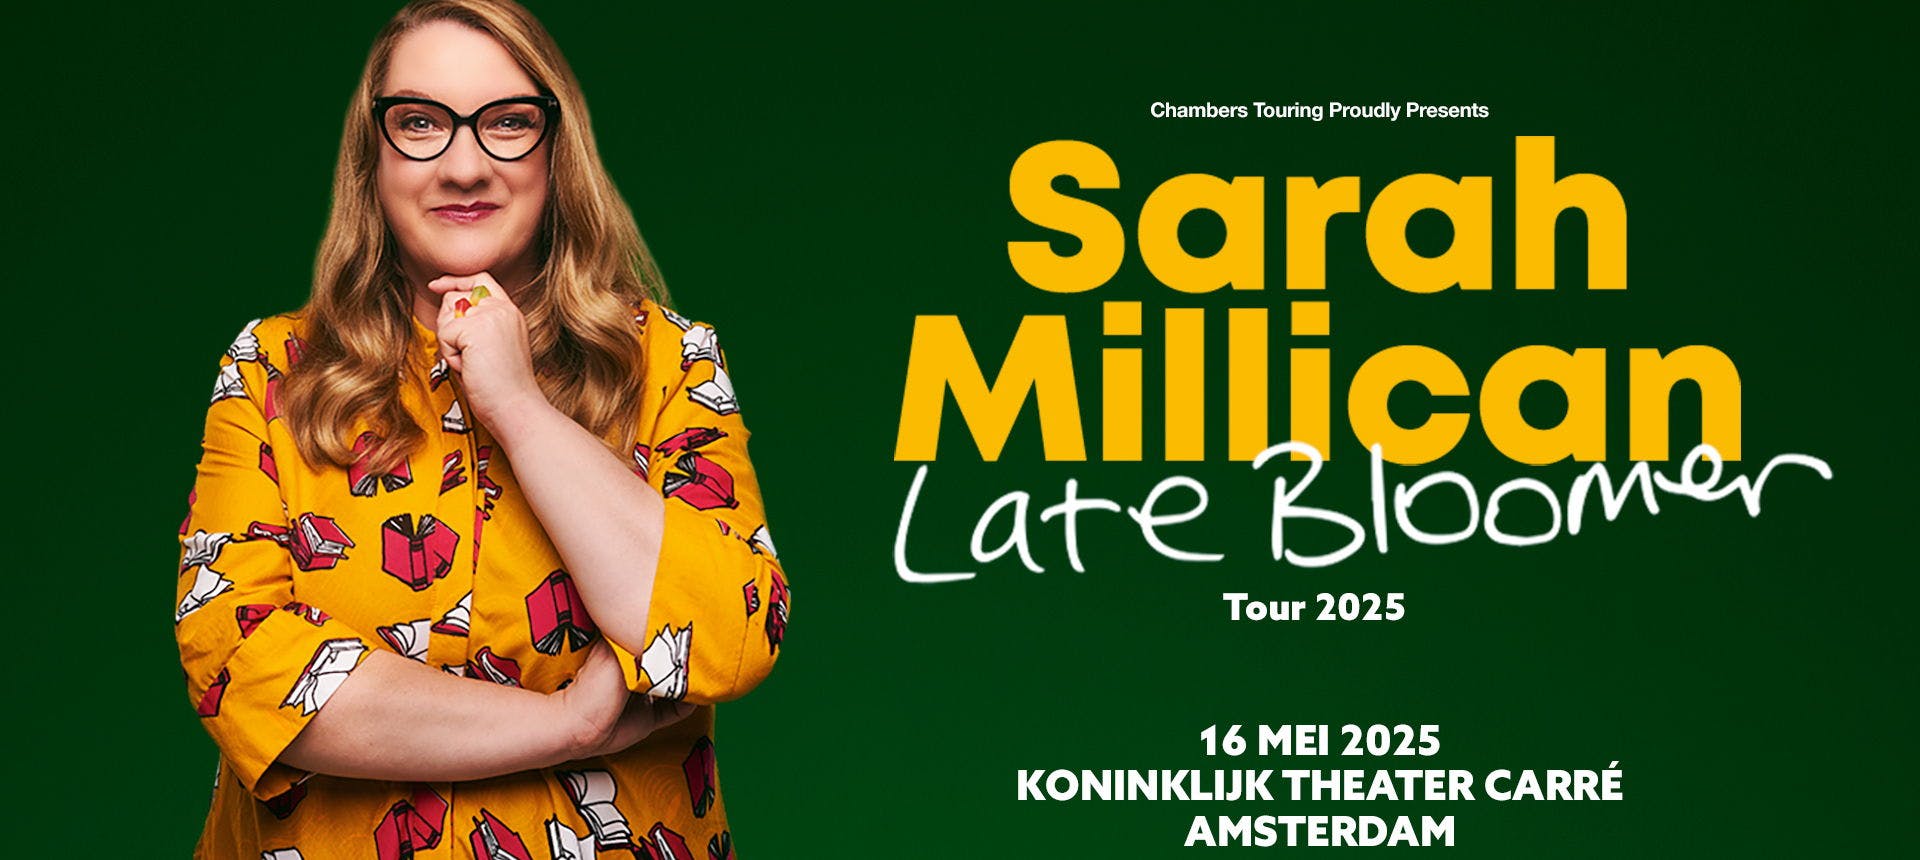 Sarah Millican - Late Bloomer